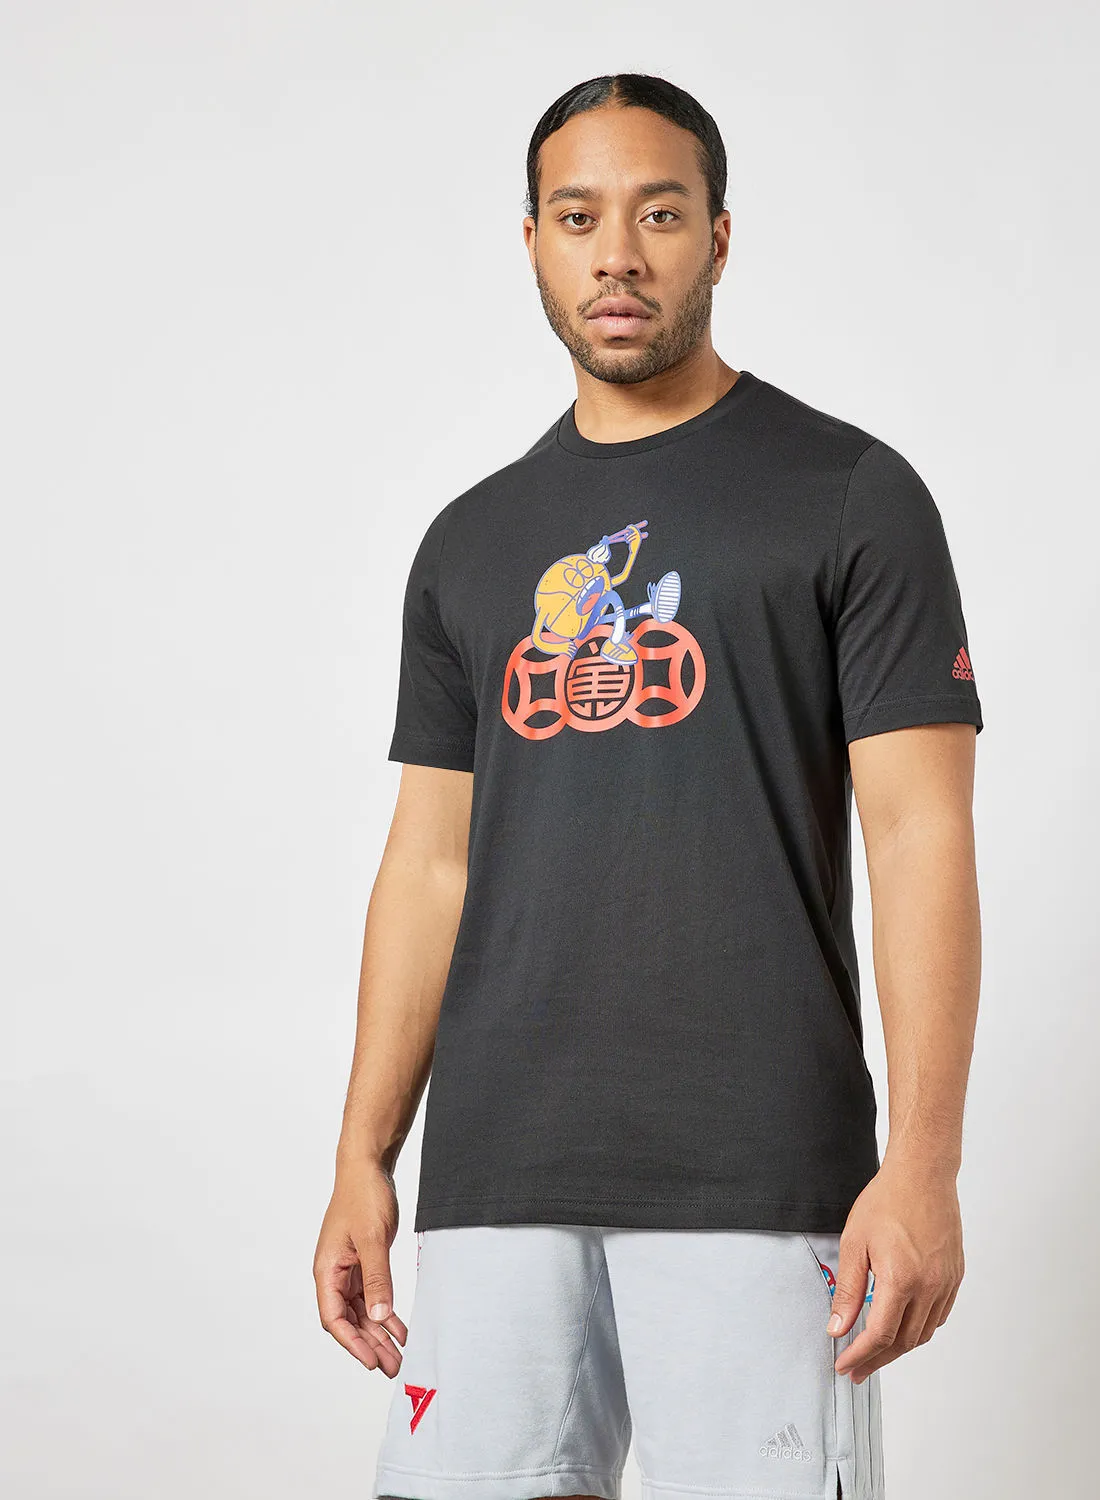 adidas Posting Up Basketball T-Shirt